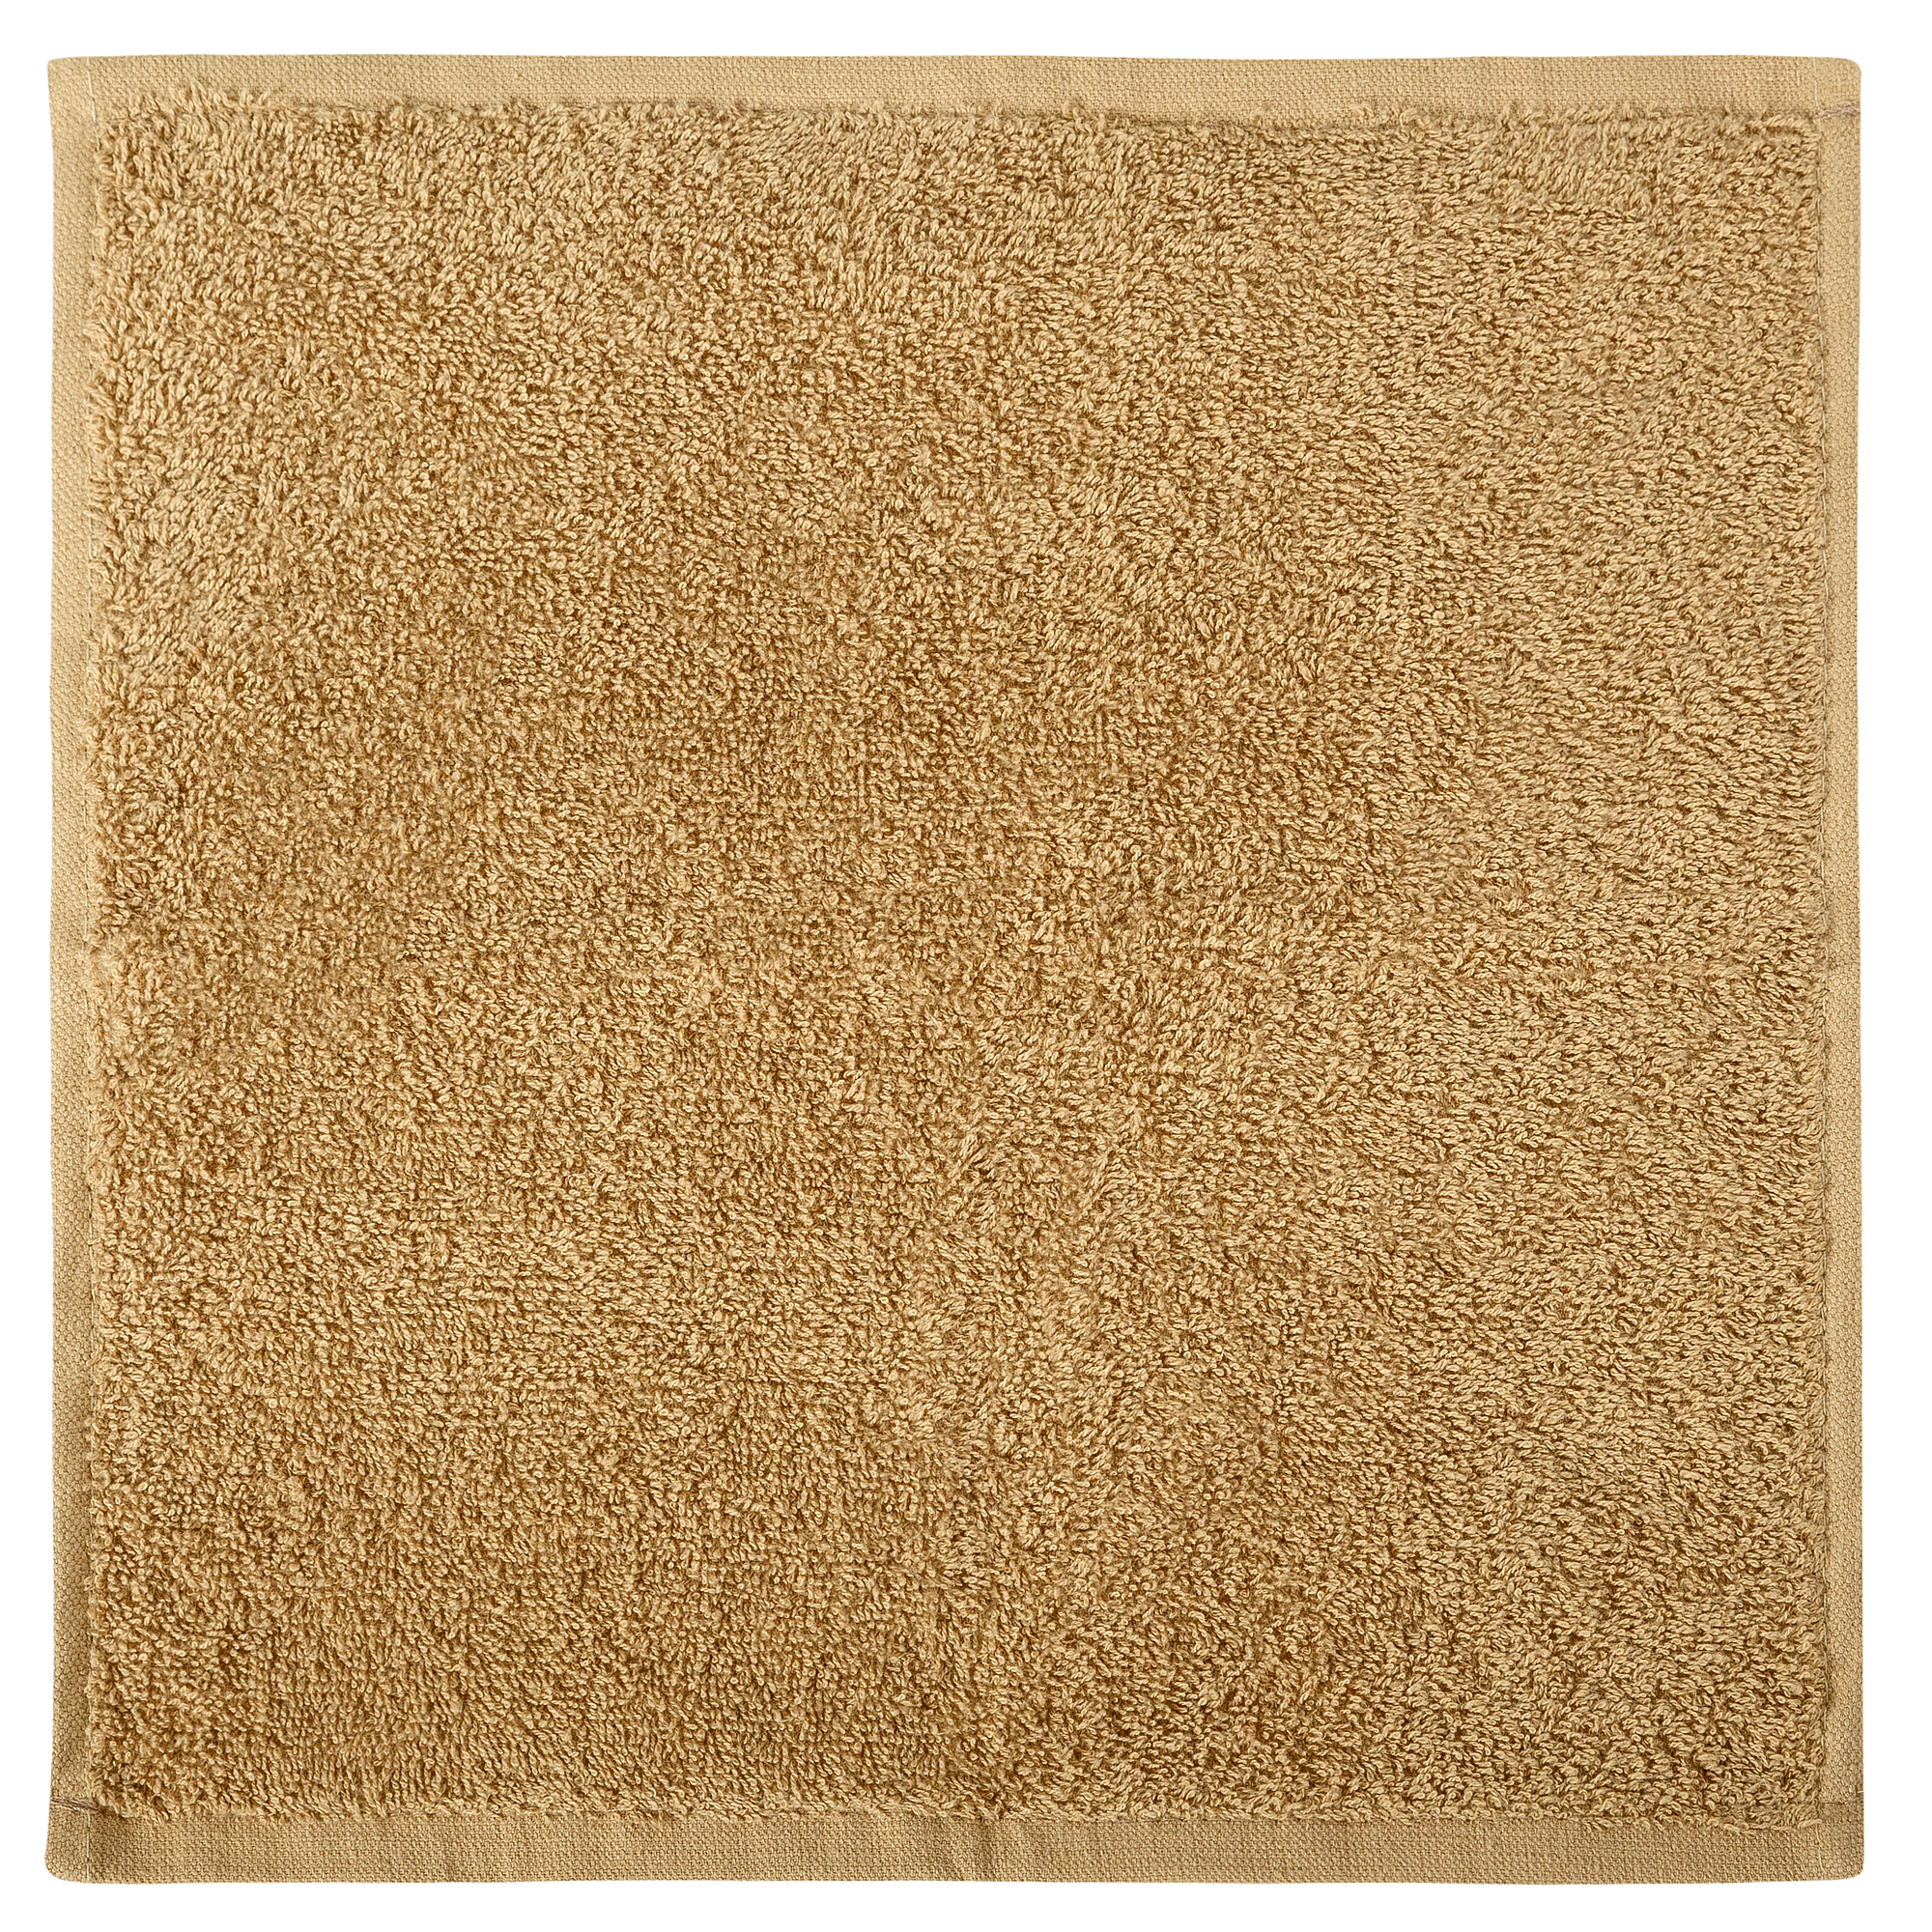 Bale Set 24pcs Iced Coffee Plain Face Towel